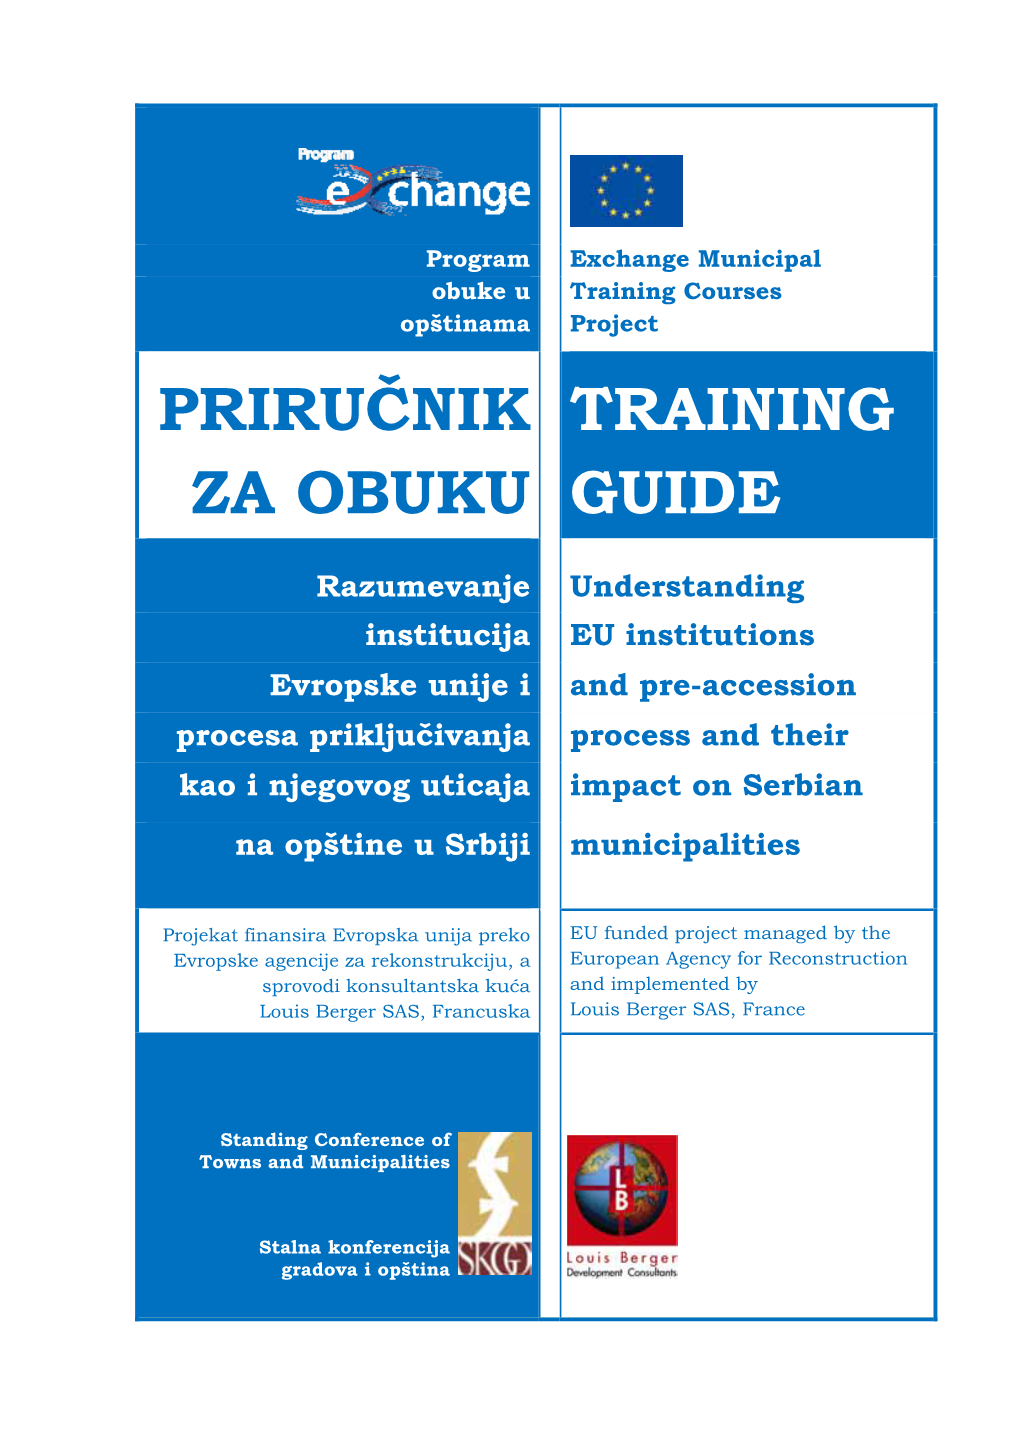 Priručnik Za Obuku Training Guide